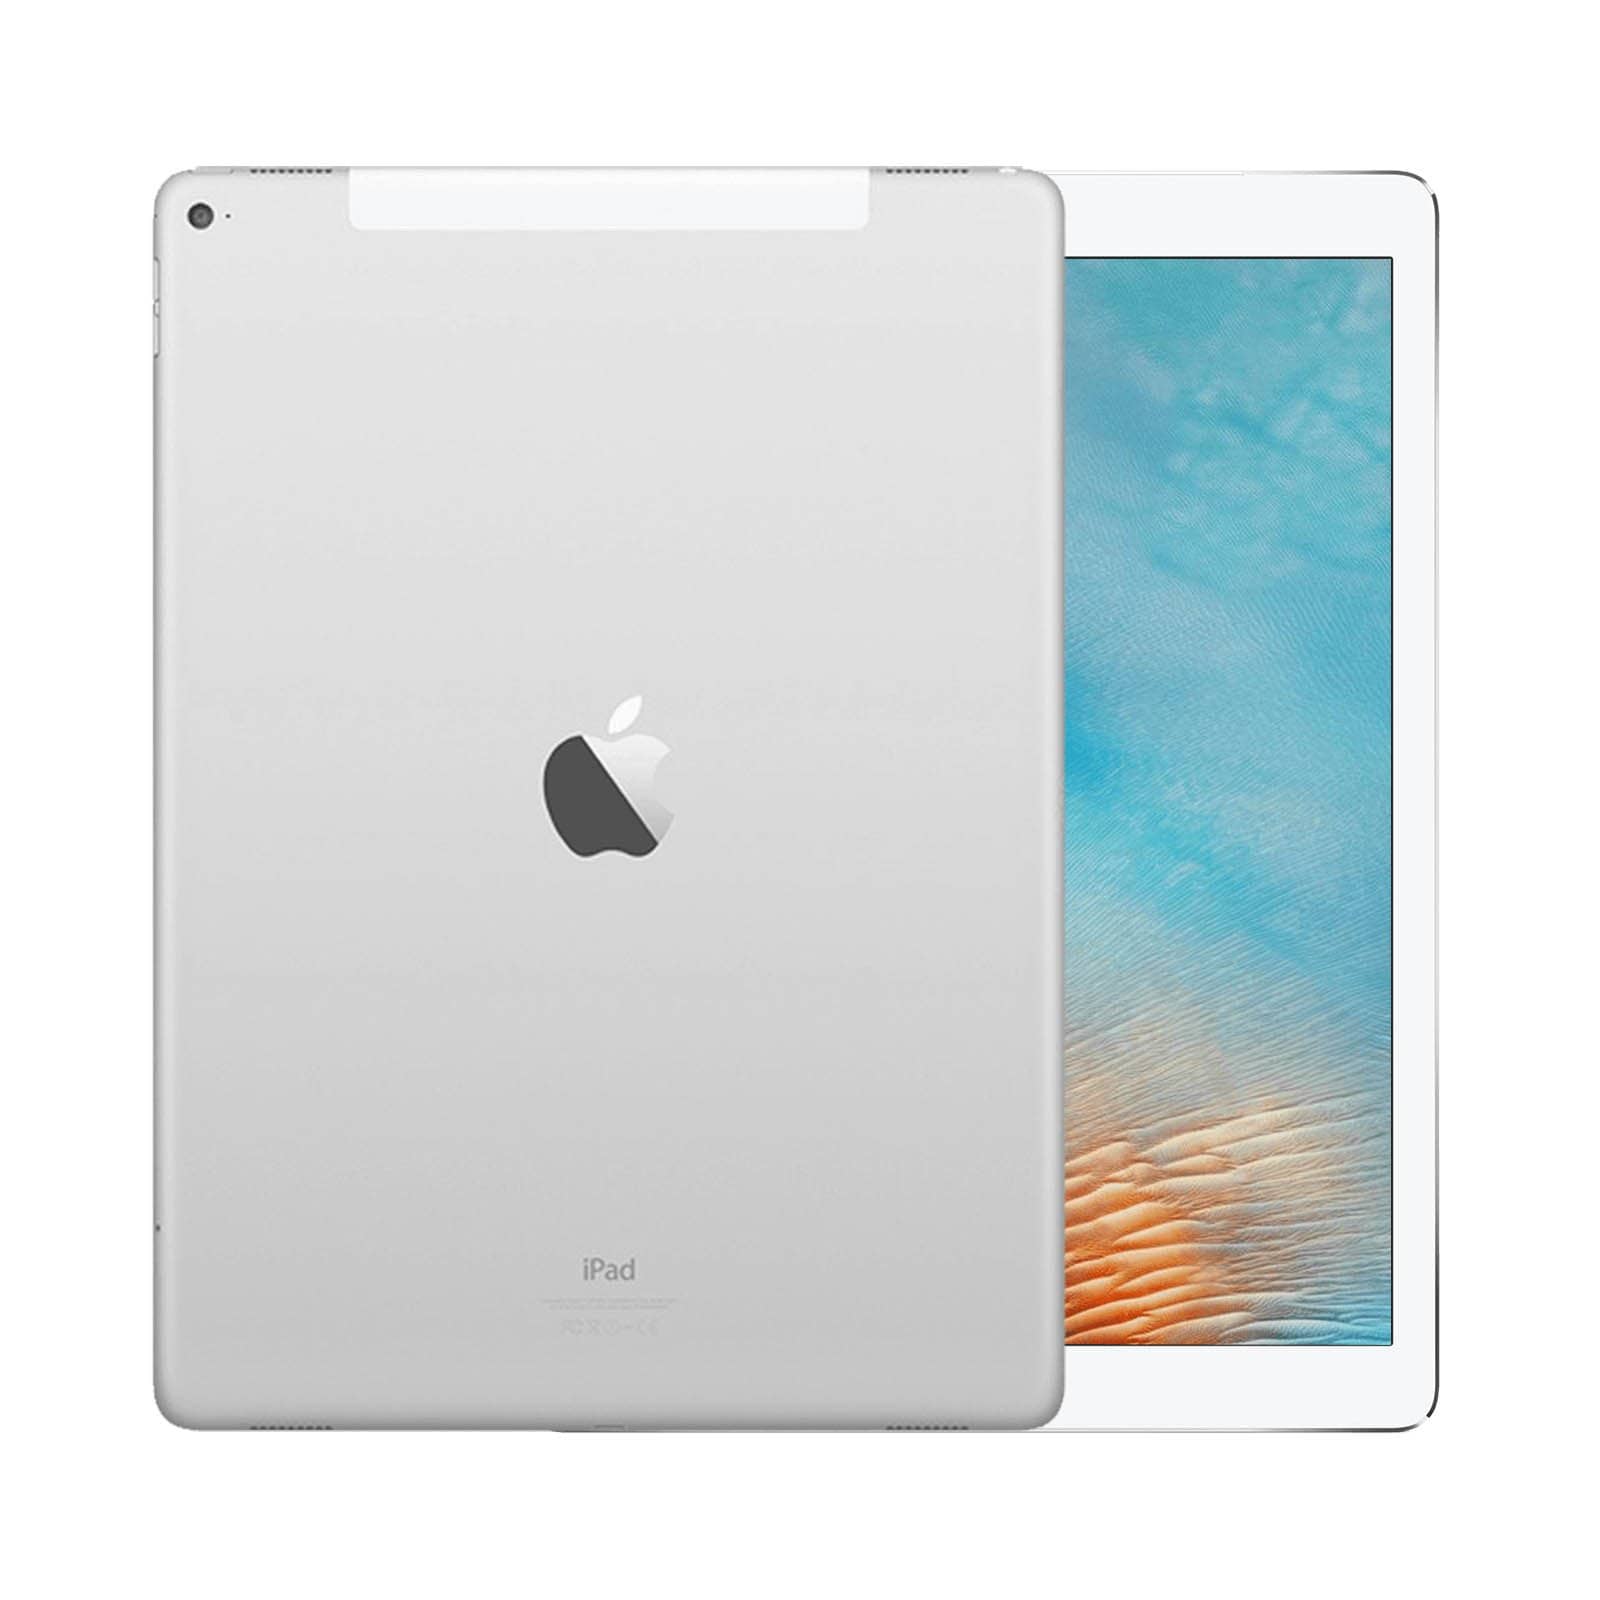 iPad Pro 12.9 Inch 2nd Gen 256GB Silver Good - Unlocked 256GB Silver Good